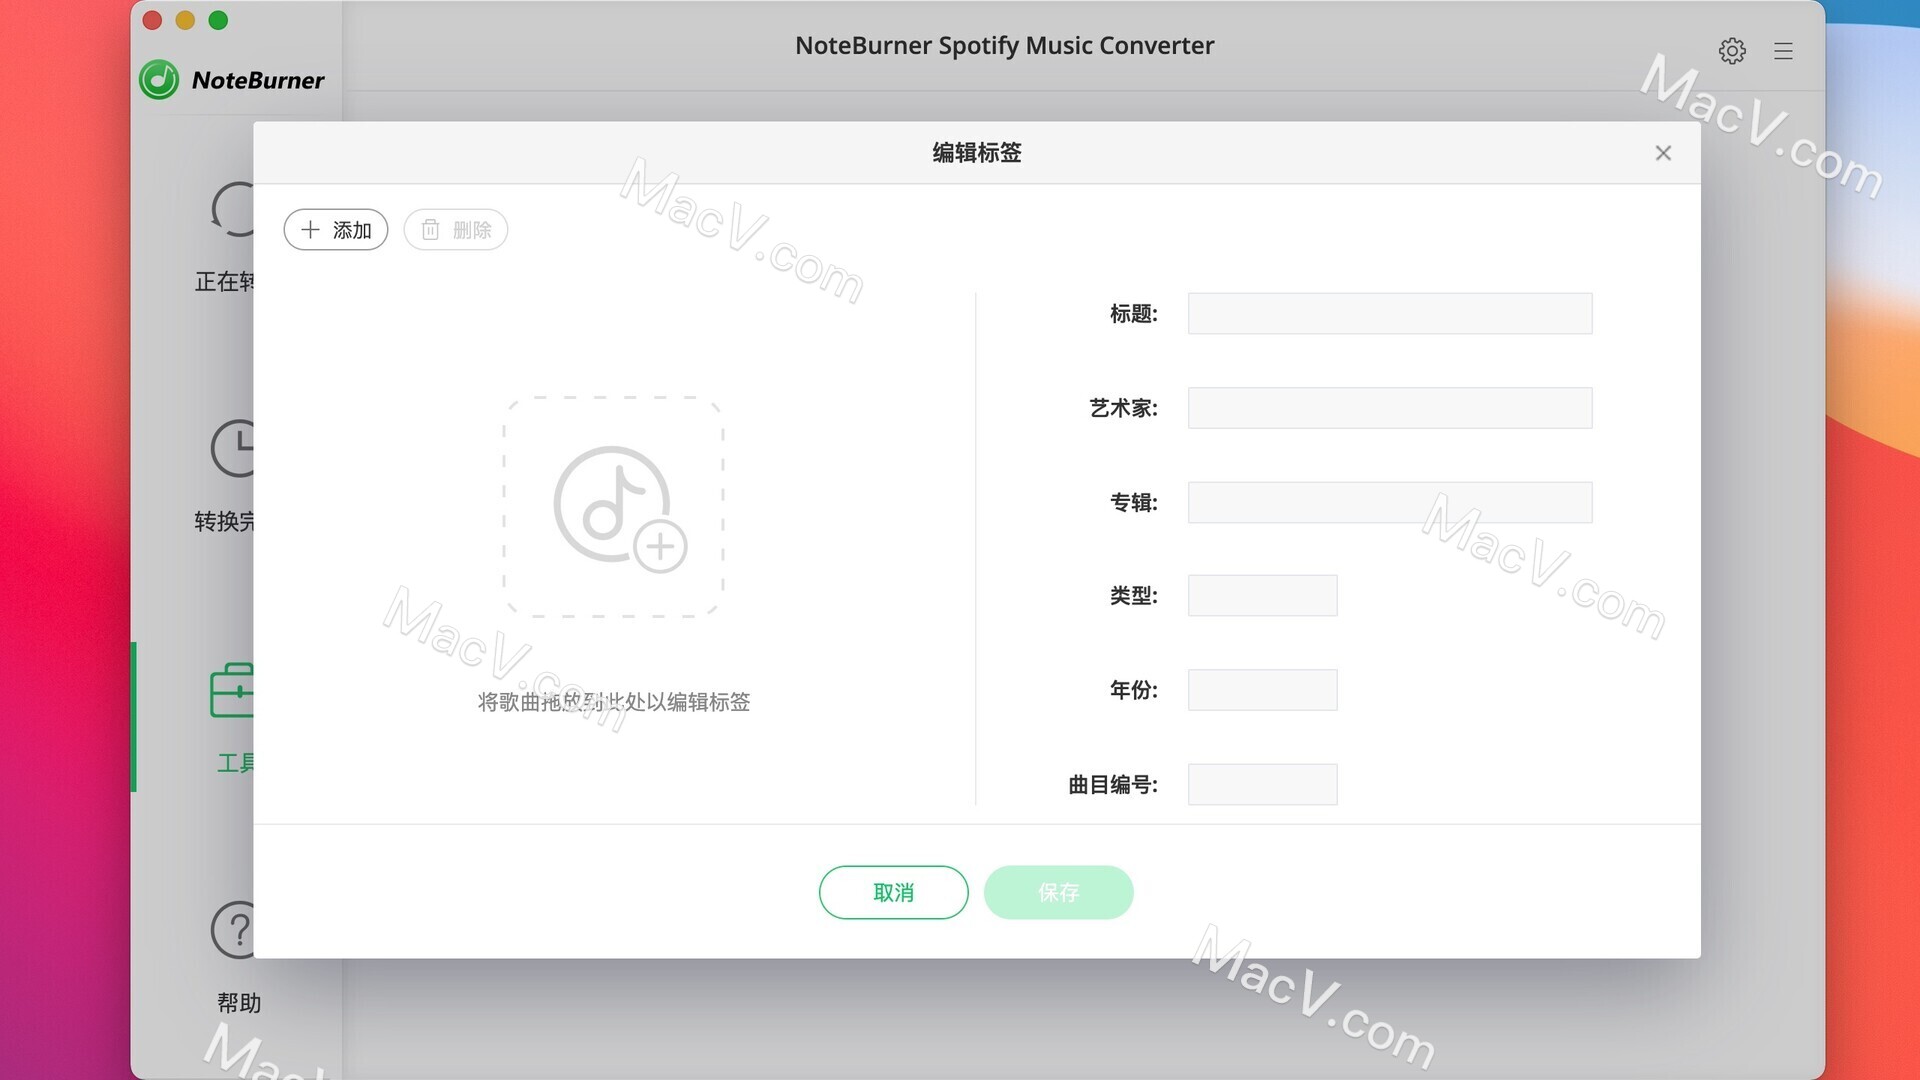 noteburner spotify music converter for mac